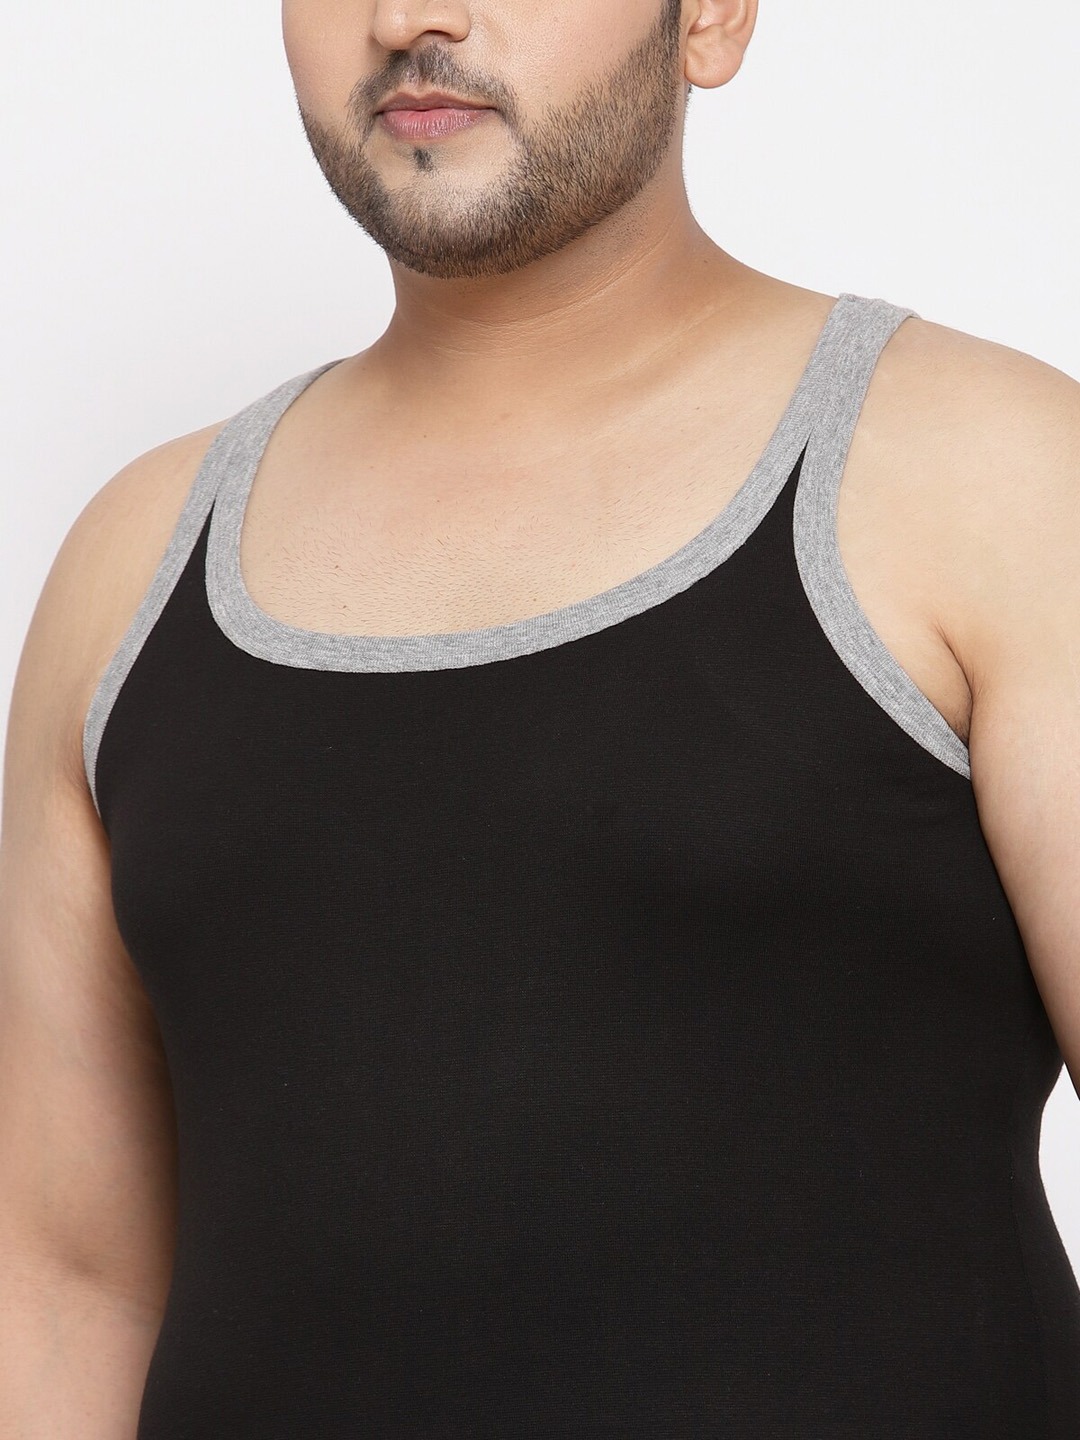 Clothing Innerwear Vests | plusS Men Plus Size Black Solid Innerwear Vest MSD9907 - EL59871